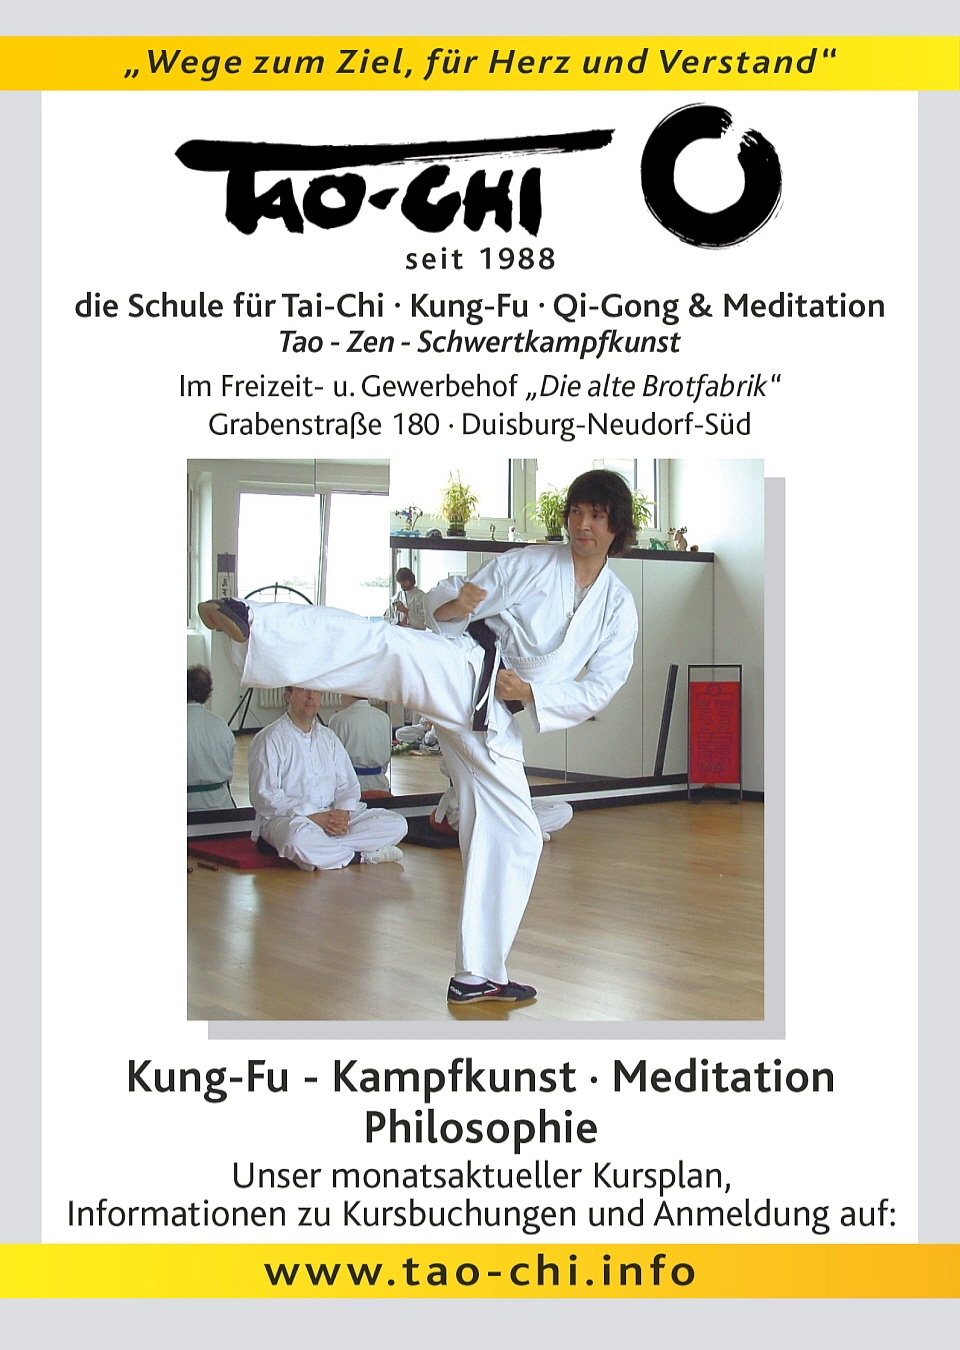 Shaolin Kung-Fu im Dojo des Tao-Chi Duisburg